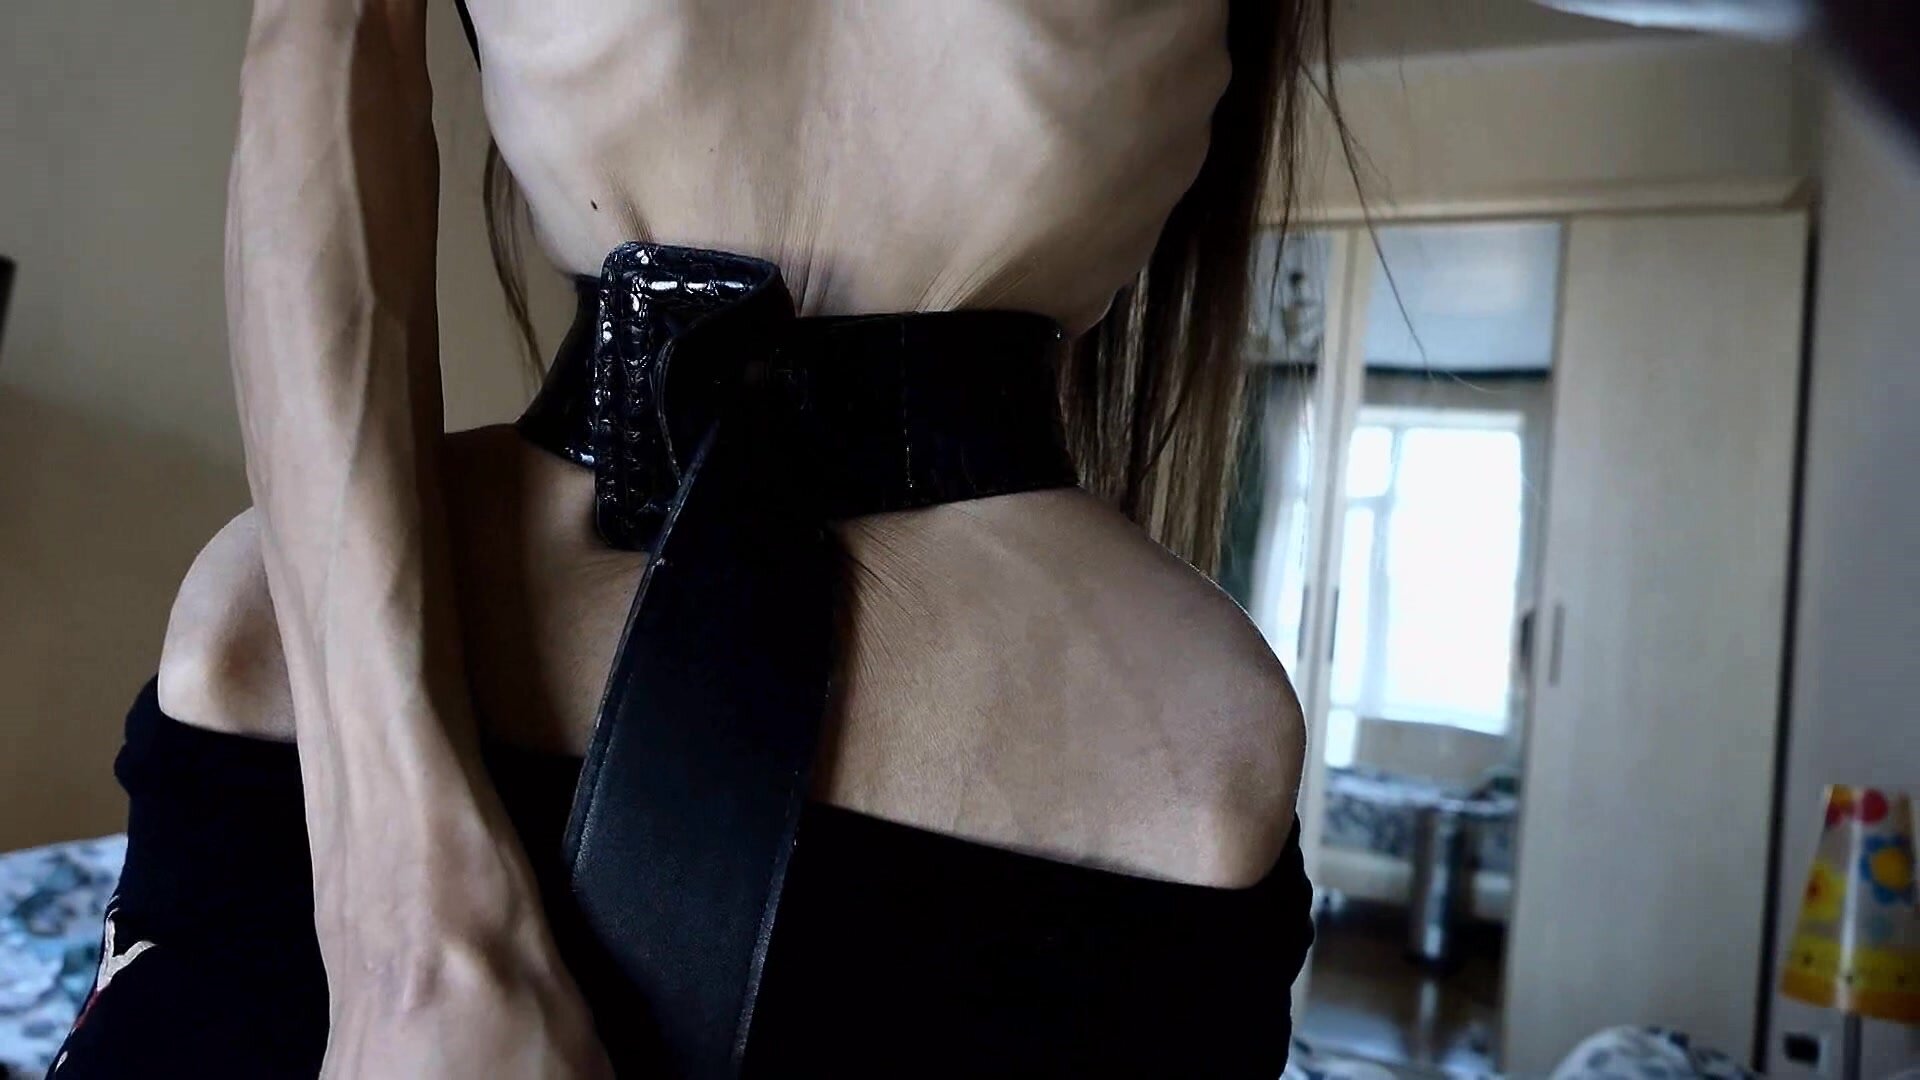 Anorexic Tightening a belt around her tiny waist.